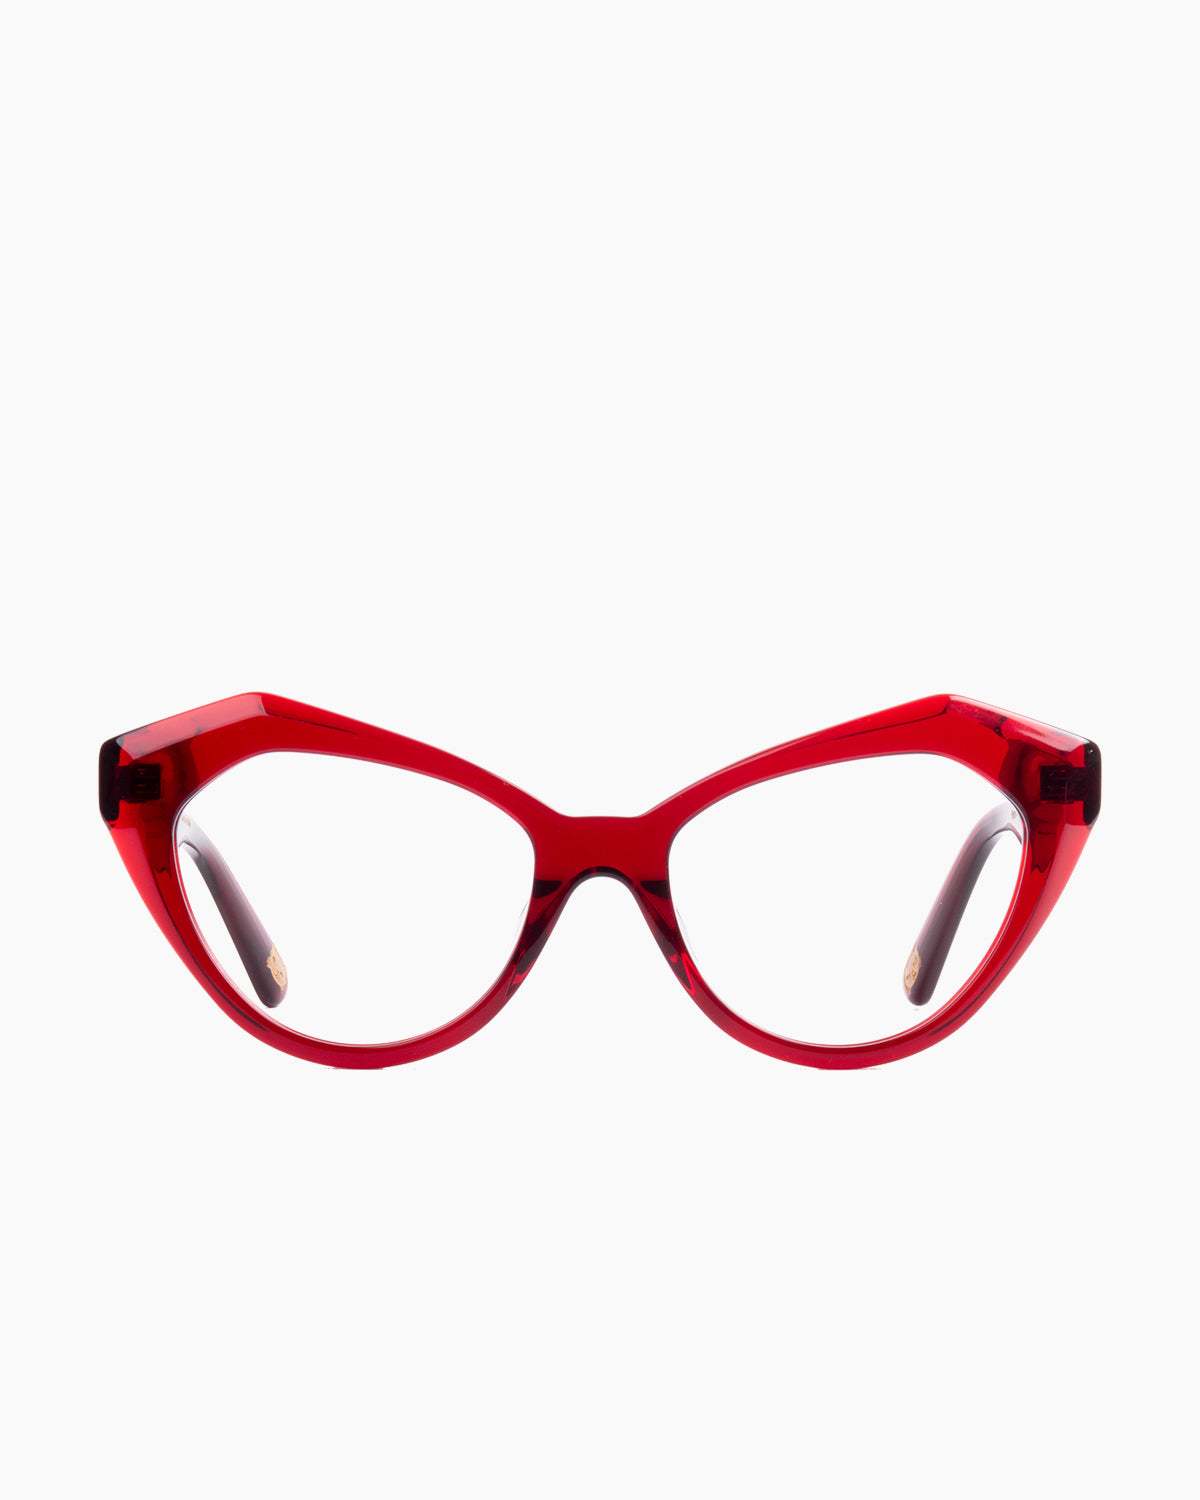 Spectacleeyeworks - Ayalah - c730 | glasses bar:  Marie-Sophie Dion